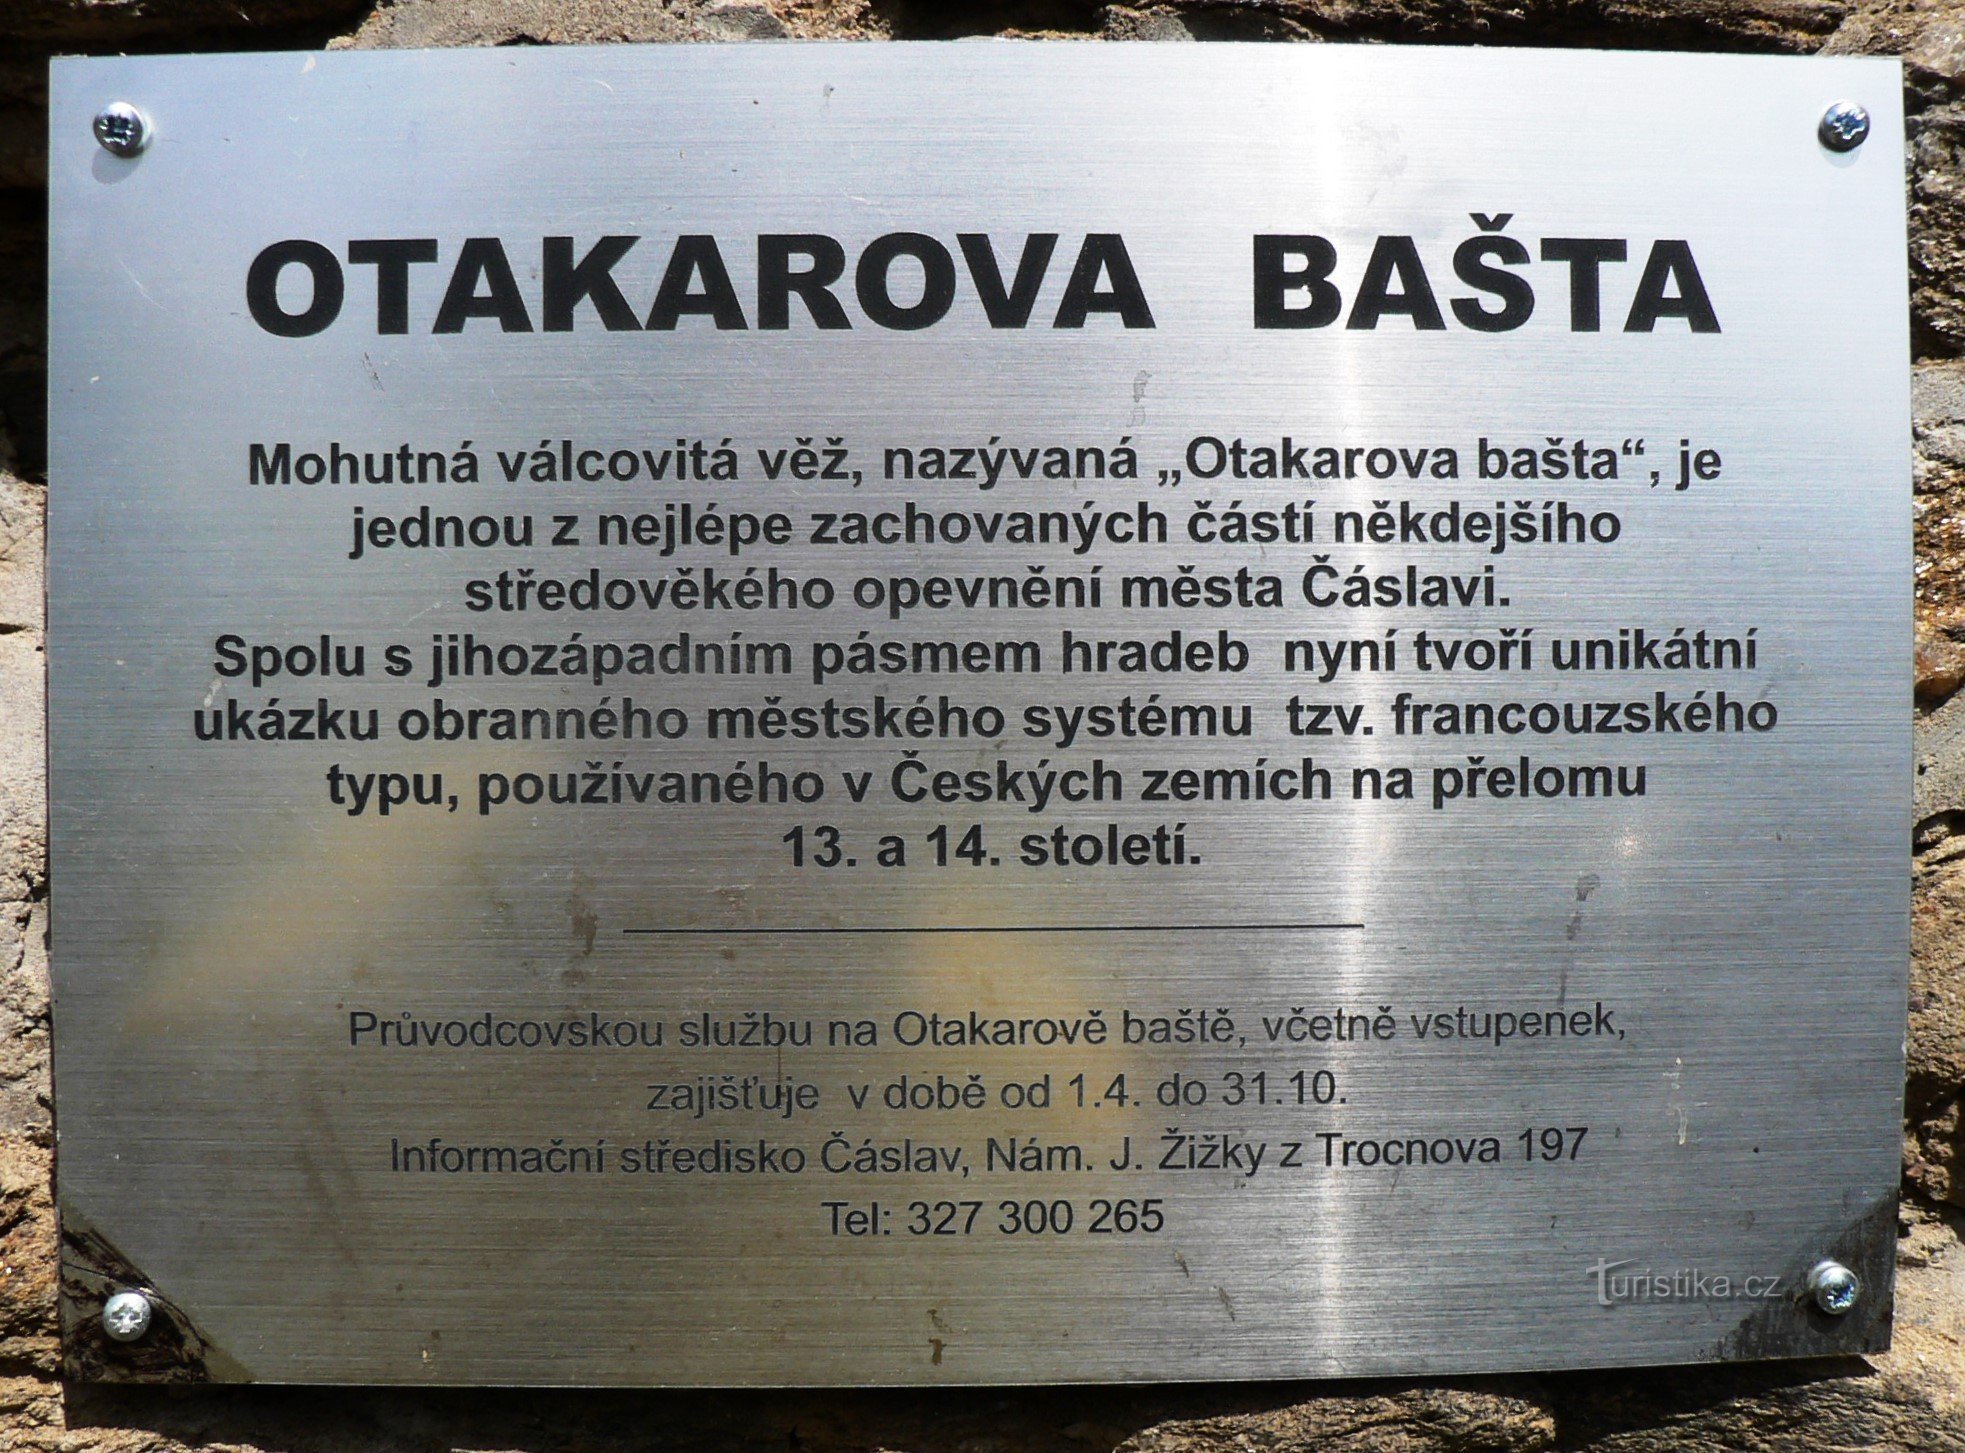 Čáslav - Otakarova kula i zidine